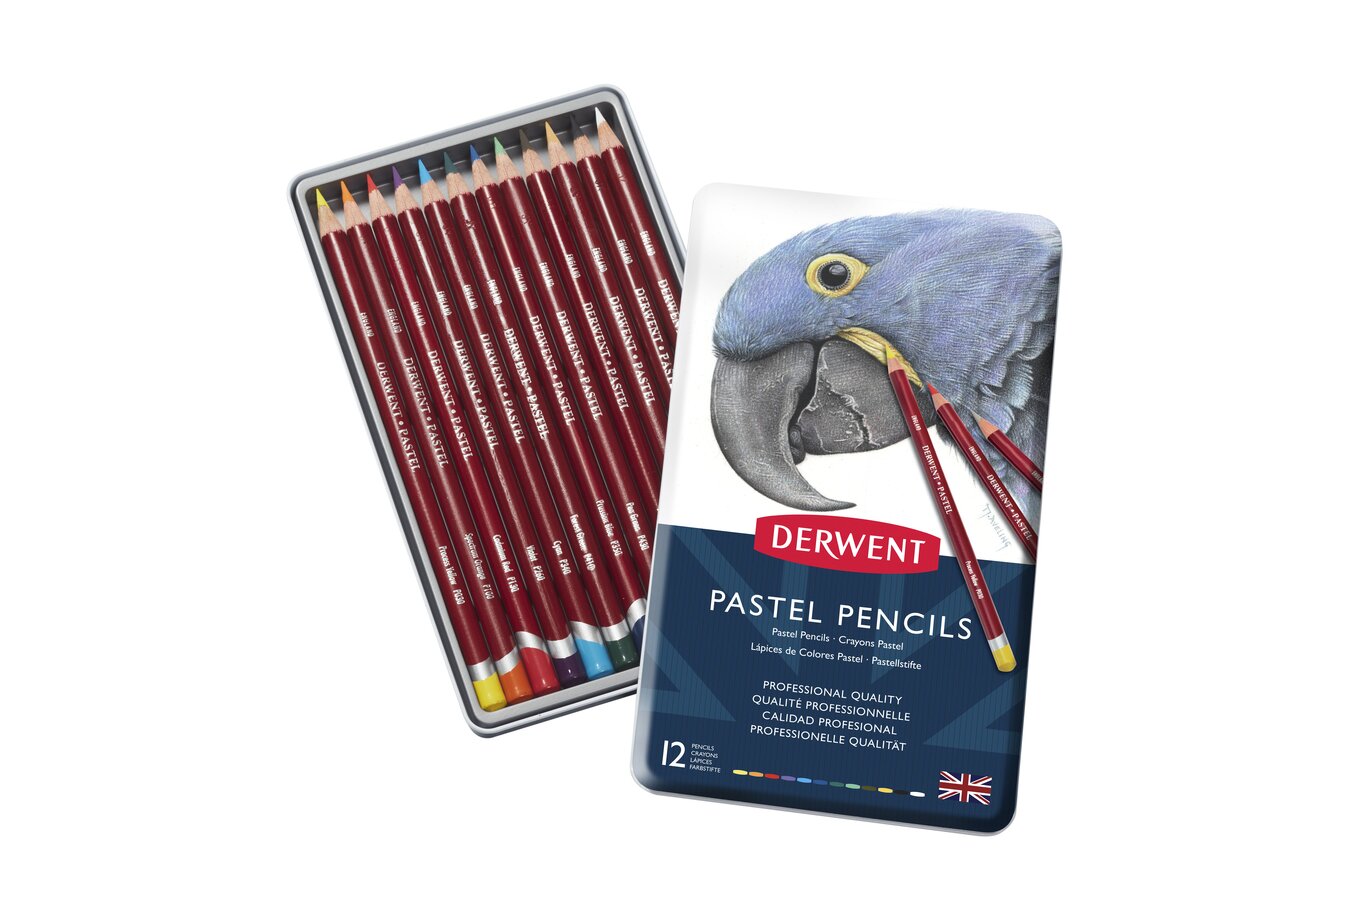 Pitt® Pastel Pencil - #225 Dark Red - #112125 – Faber-Castell USA